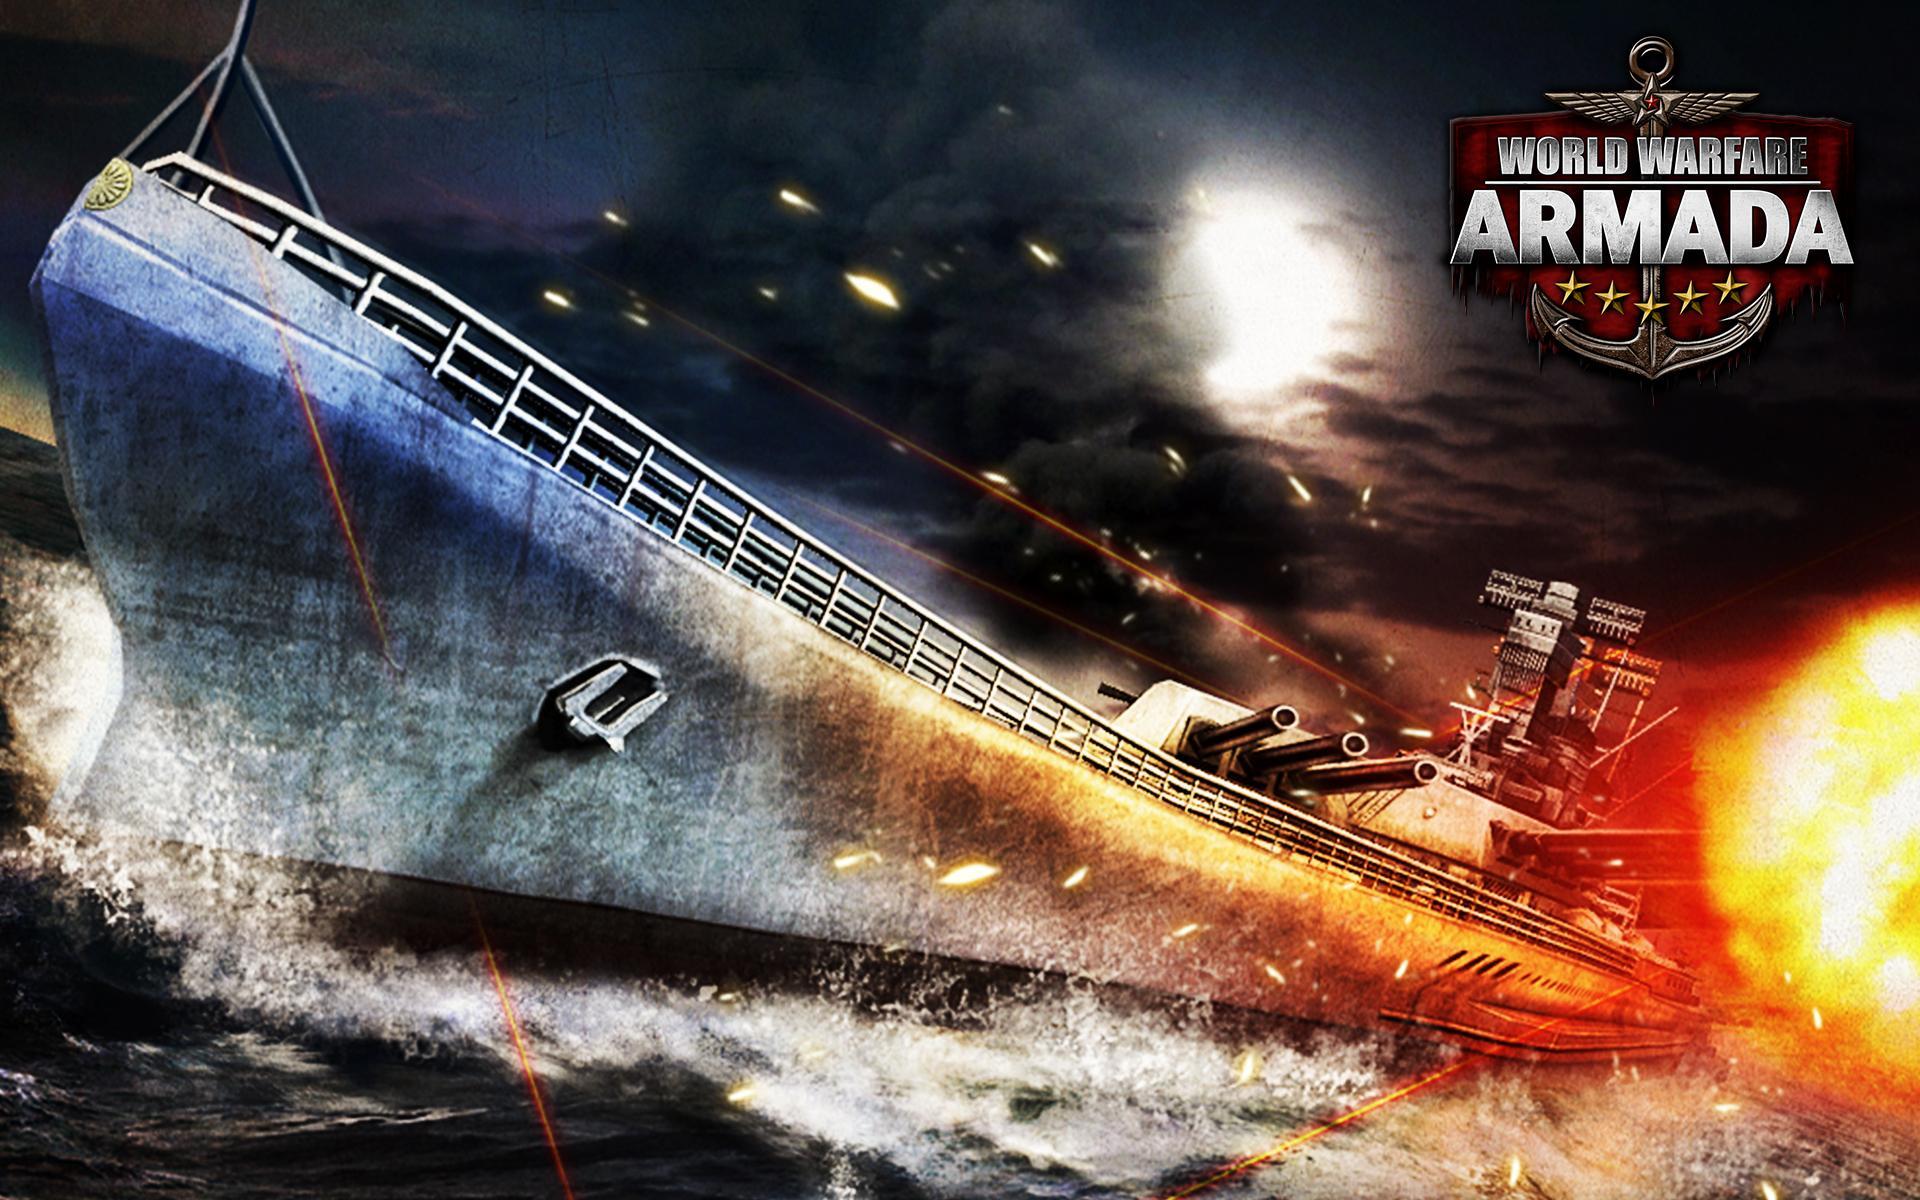 Screenshot 1 of Guerra Mondiale: Armata 3.5.0